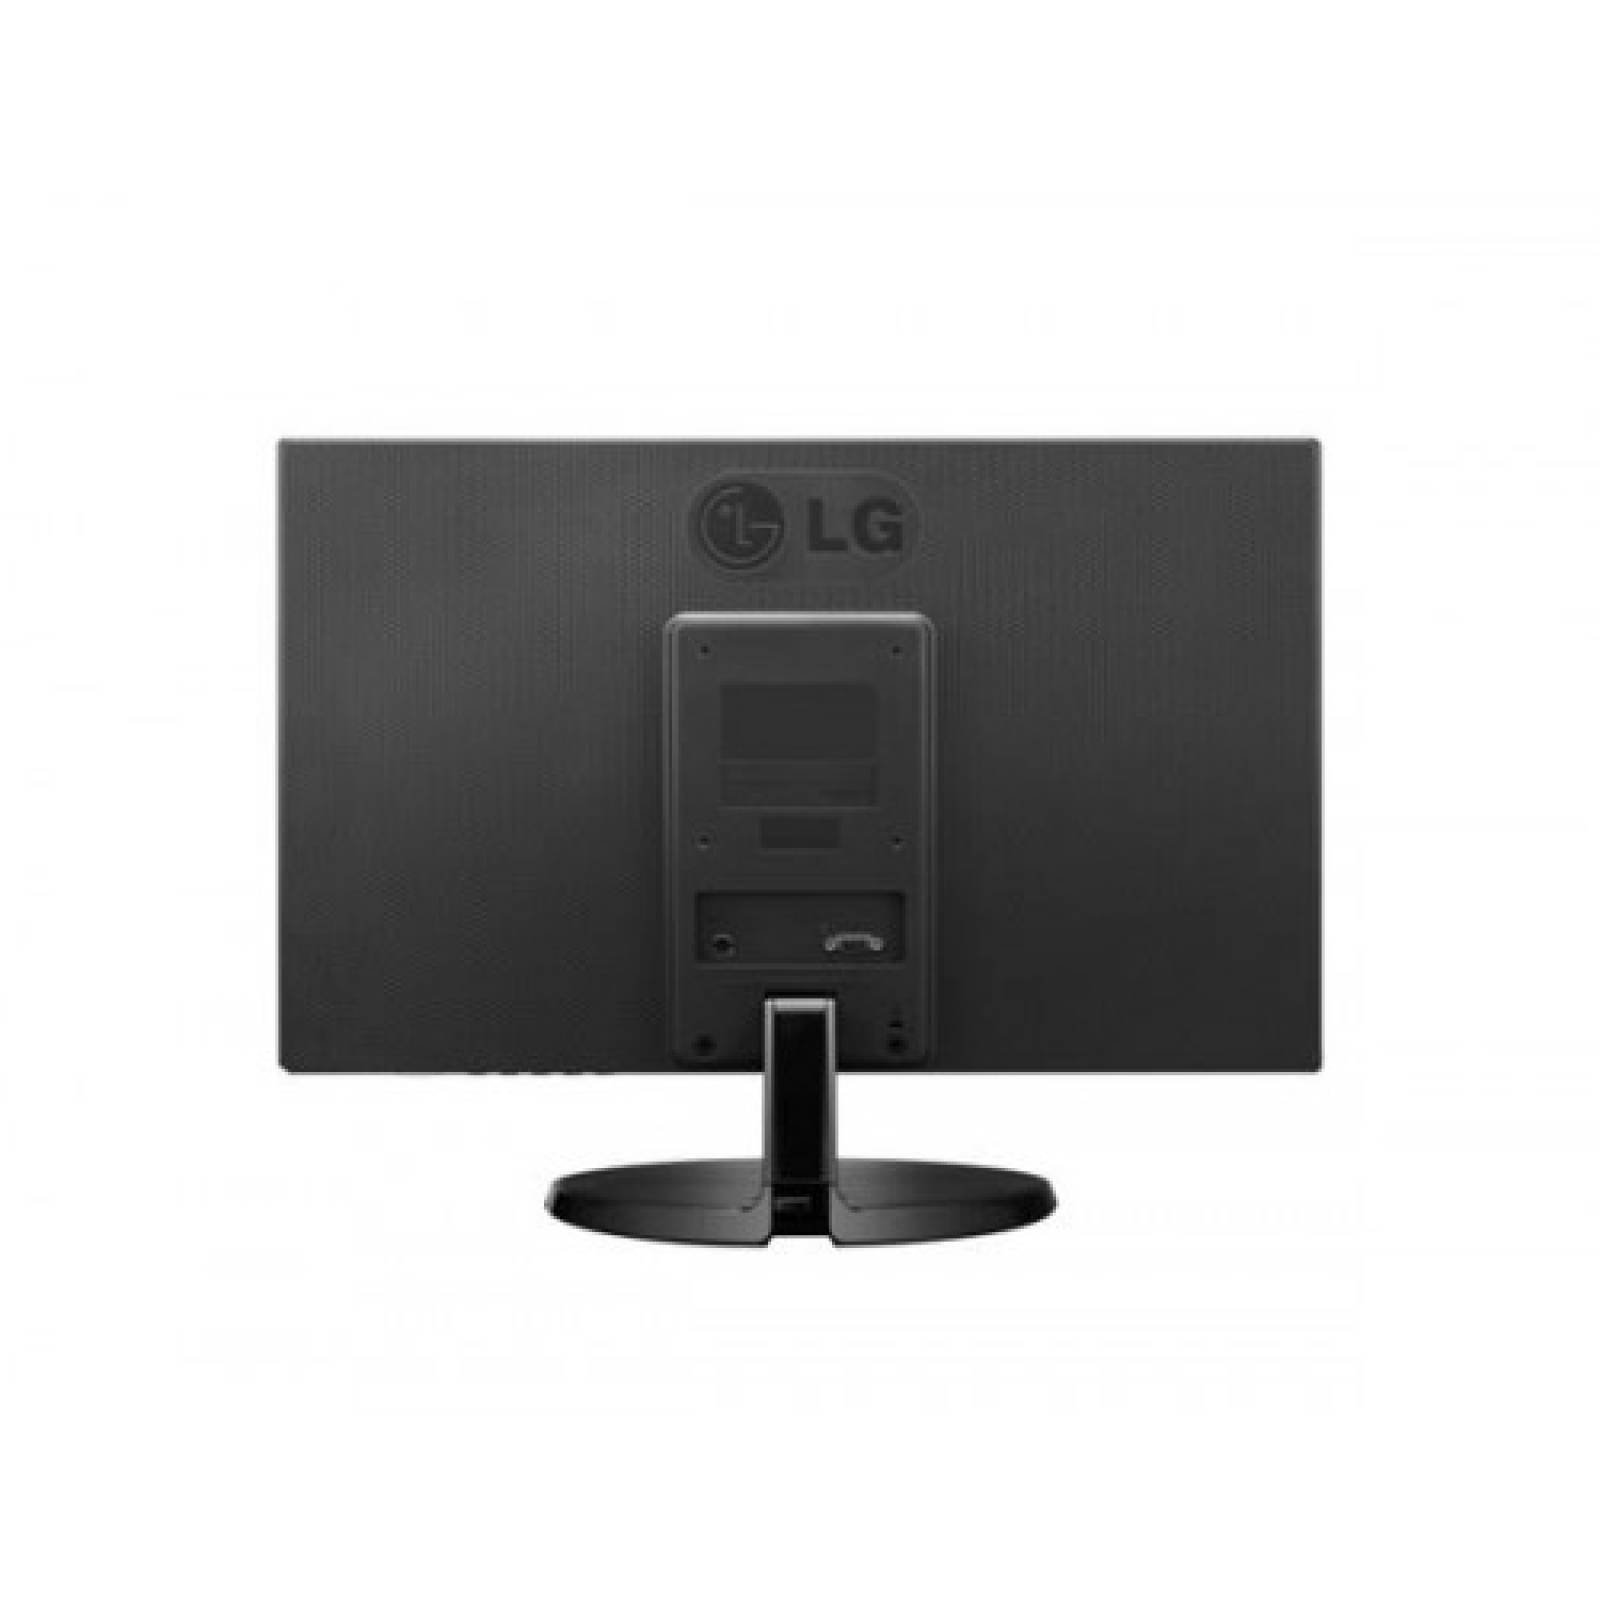 Monitor LG 19 Led HD VGA 19M38A